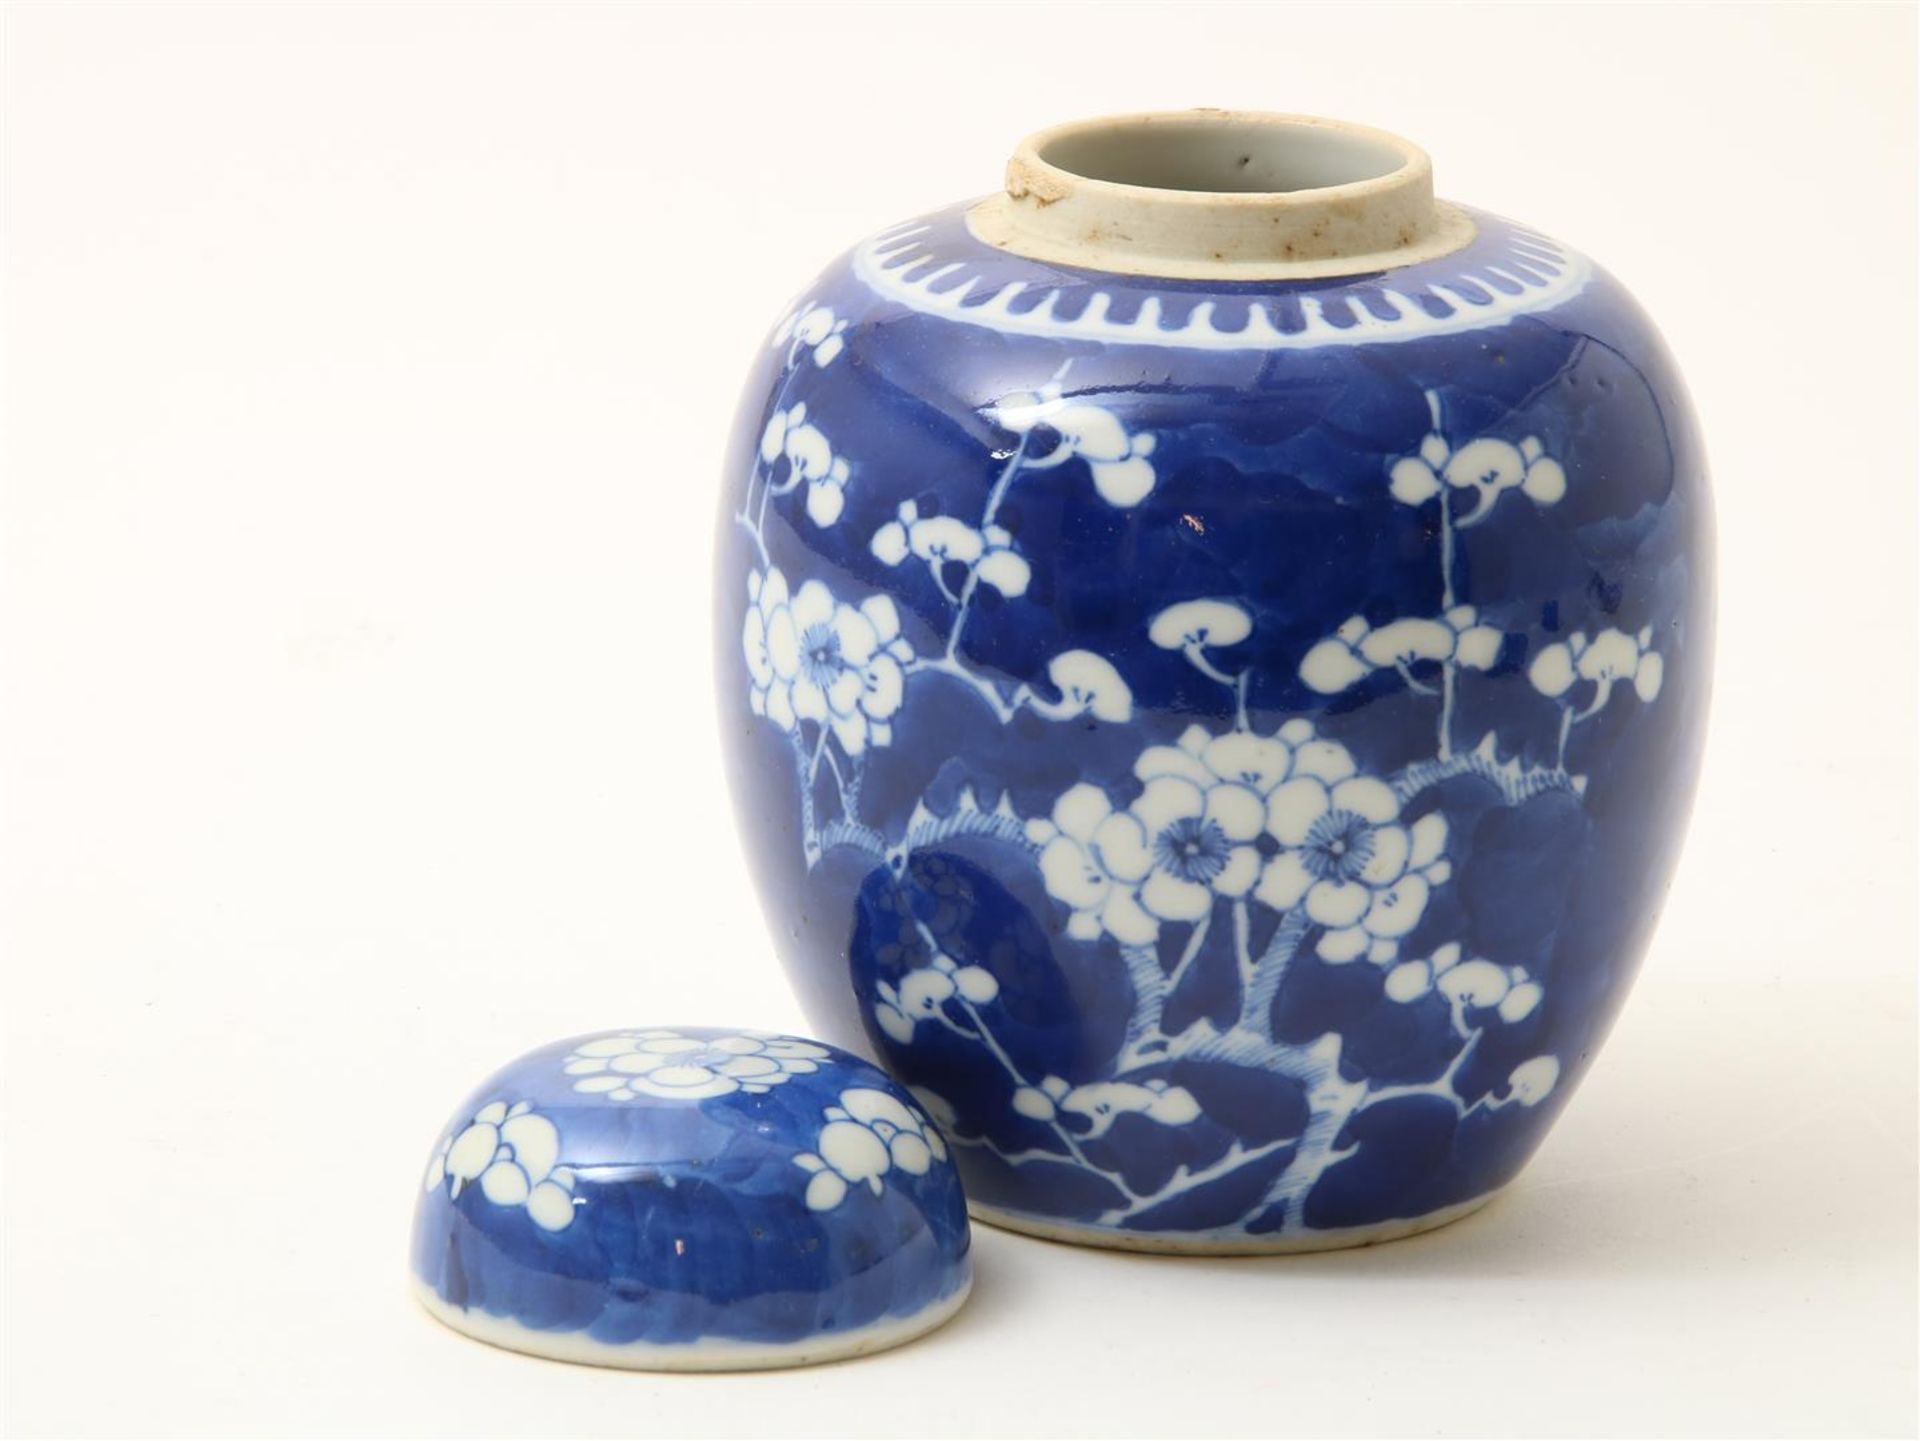 Porcelain ginger jar, cracked ice decor, China 19th century, height: 15 cm. - Image 2 of 3